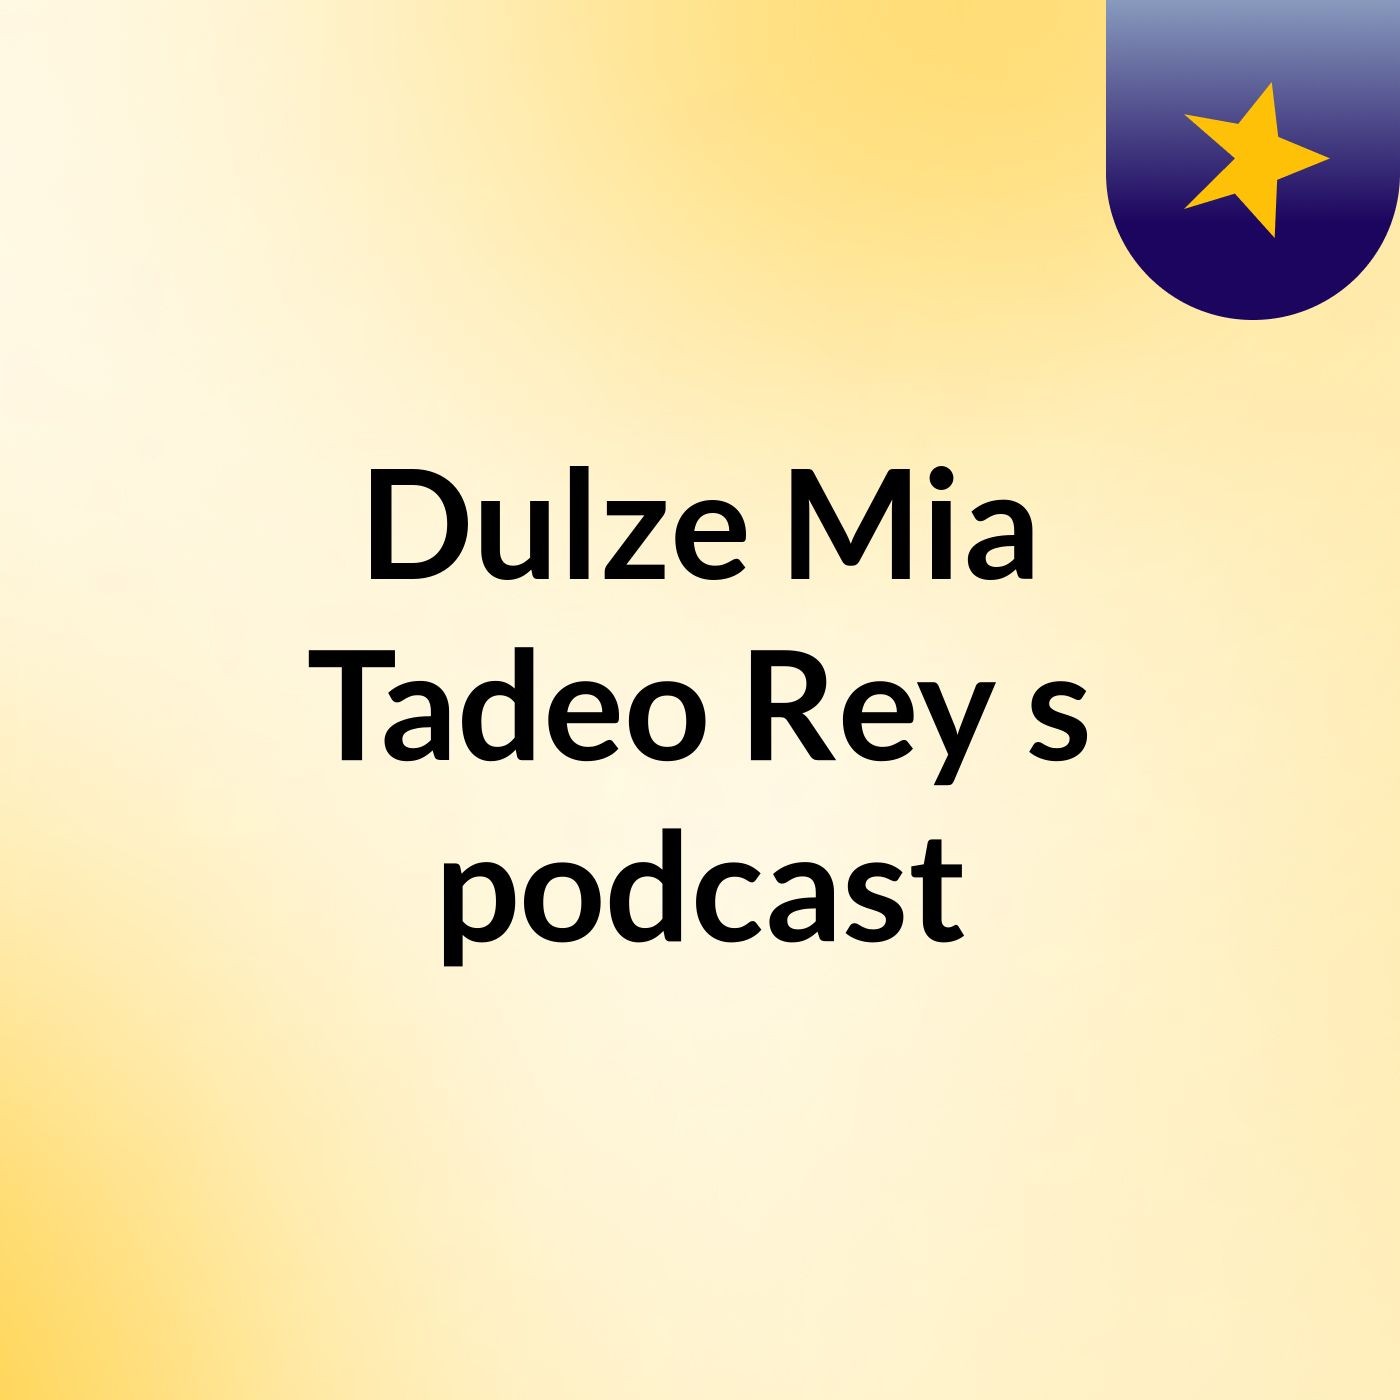 Episodio 27 - Dulze Mia Tadeo Rey's podcast